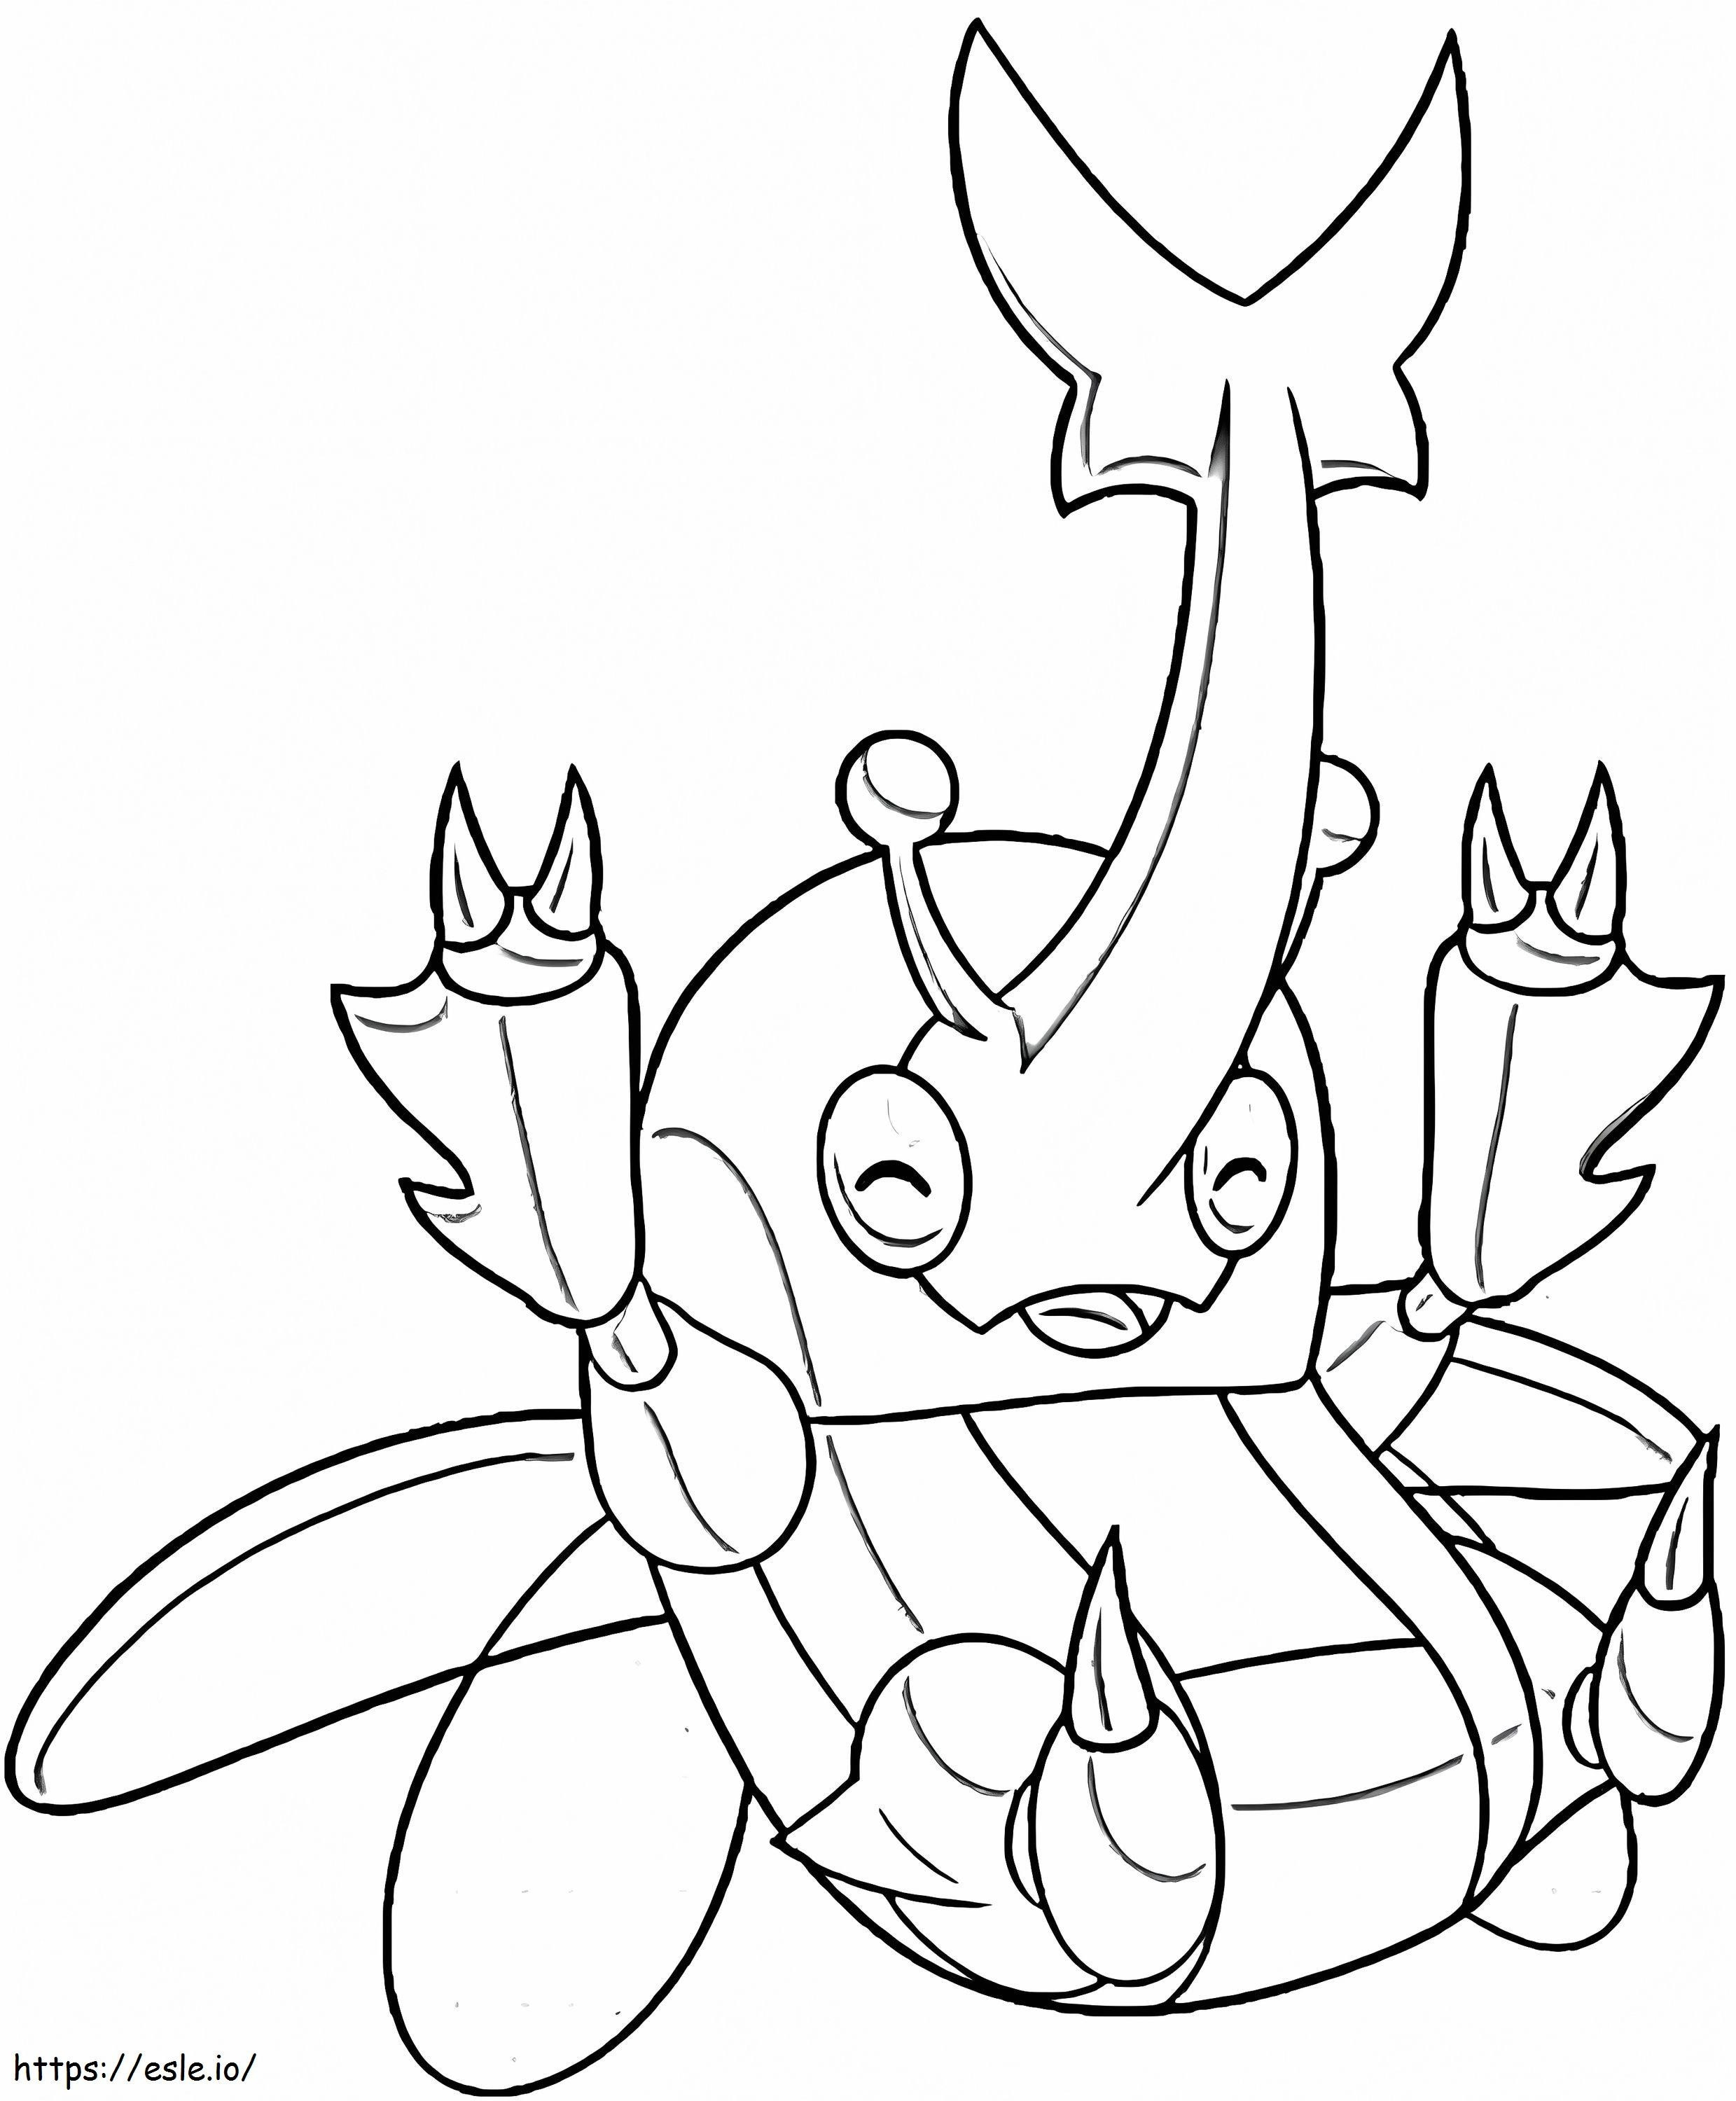 Adorable Pokemon Heracross coloring page